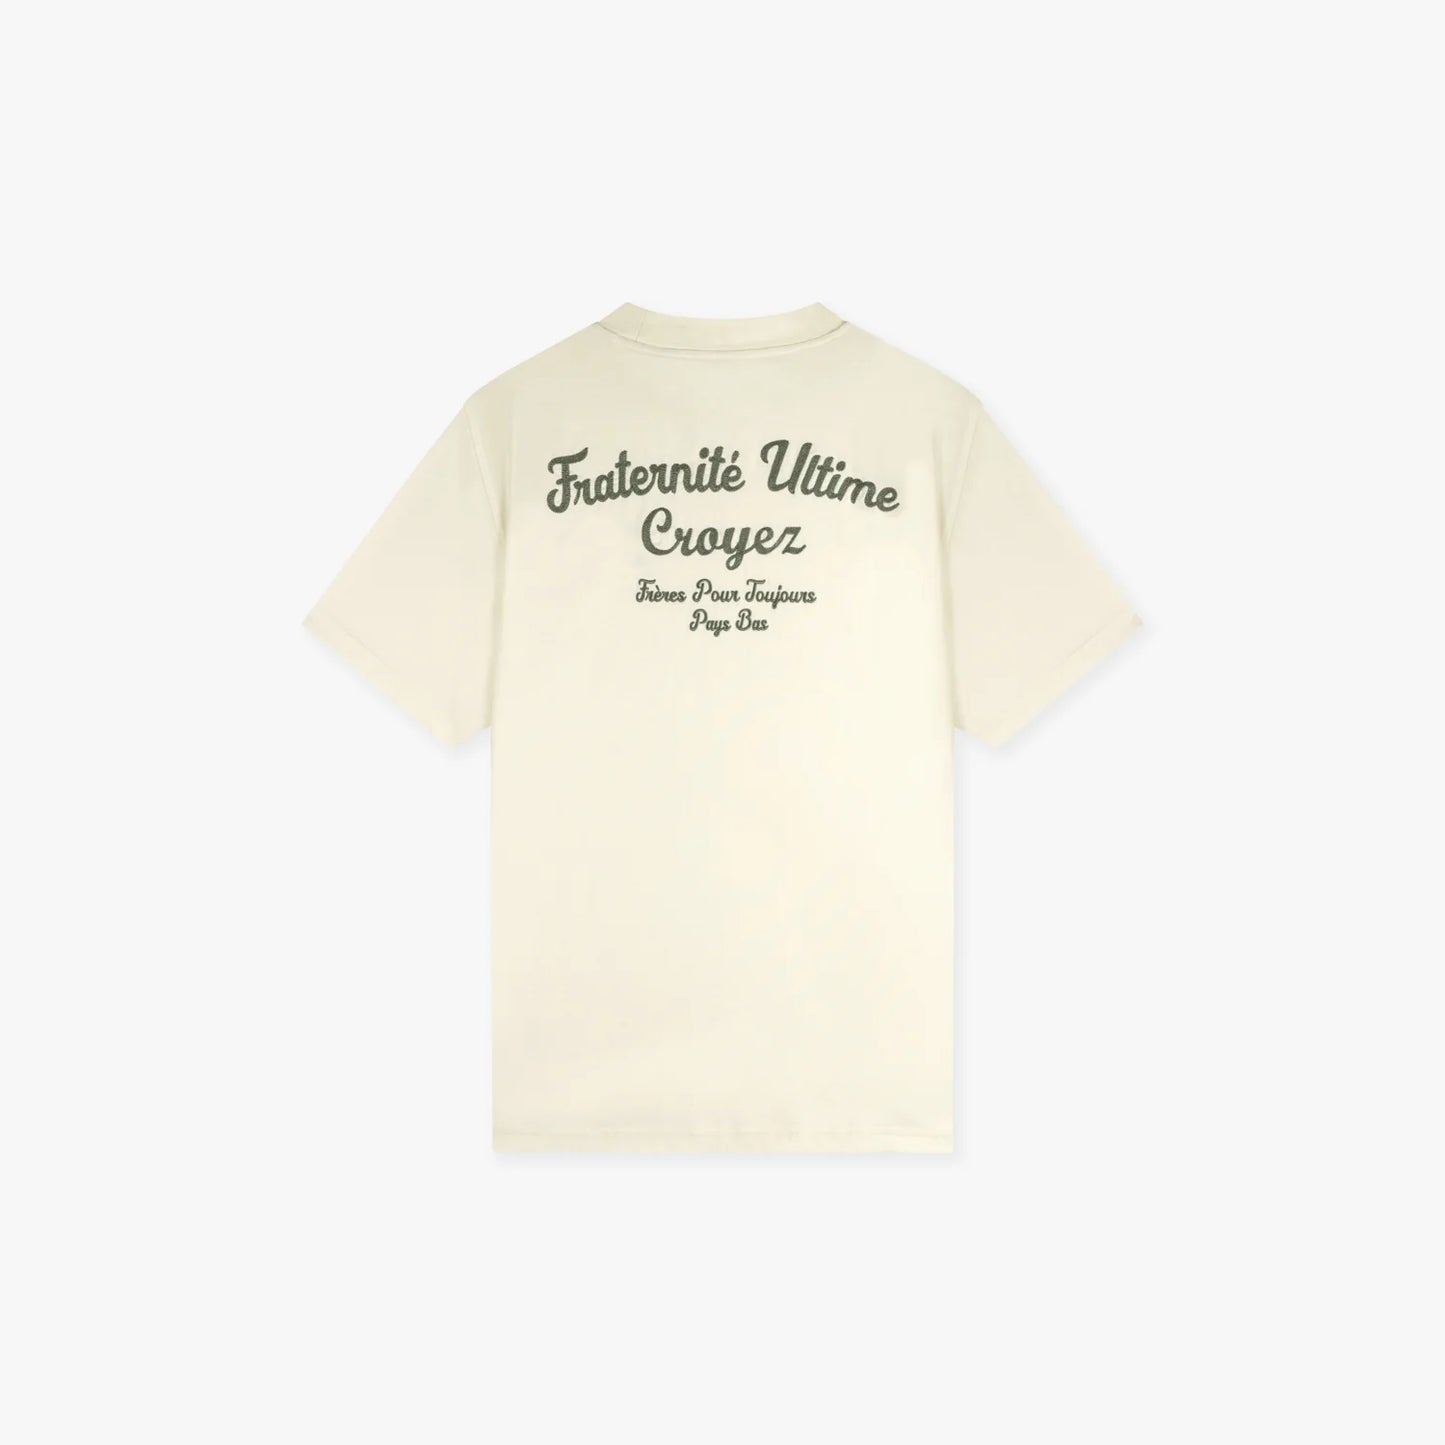 Croyez fraternité t-shirt - buttercream/washed olive